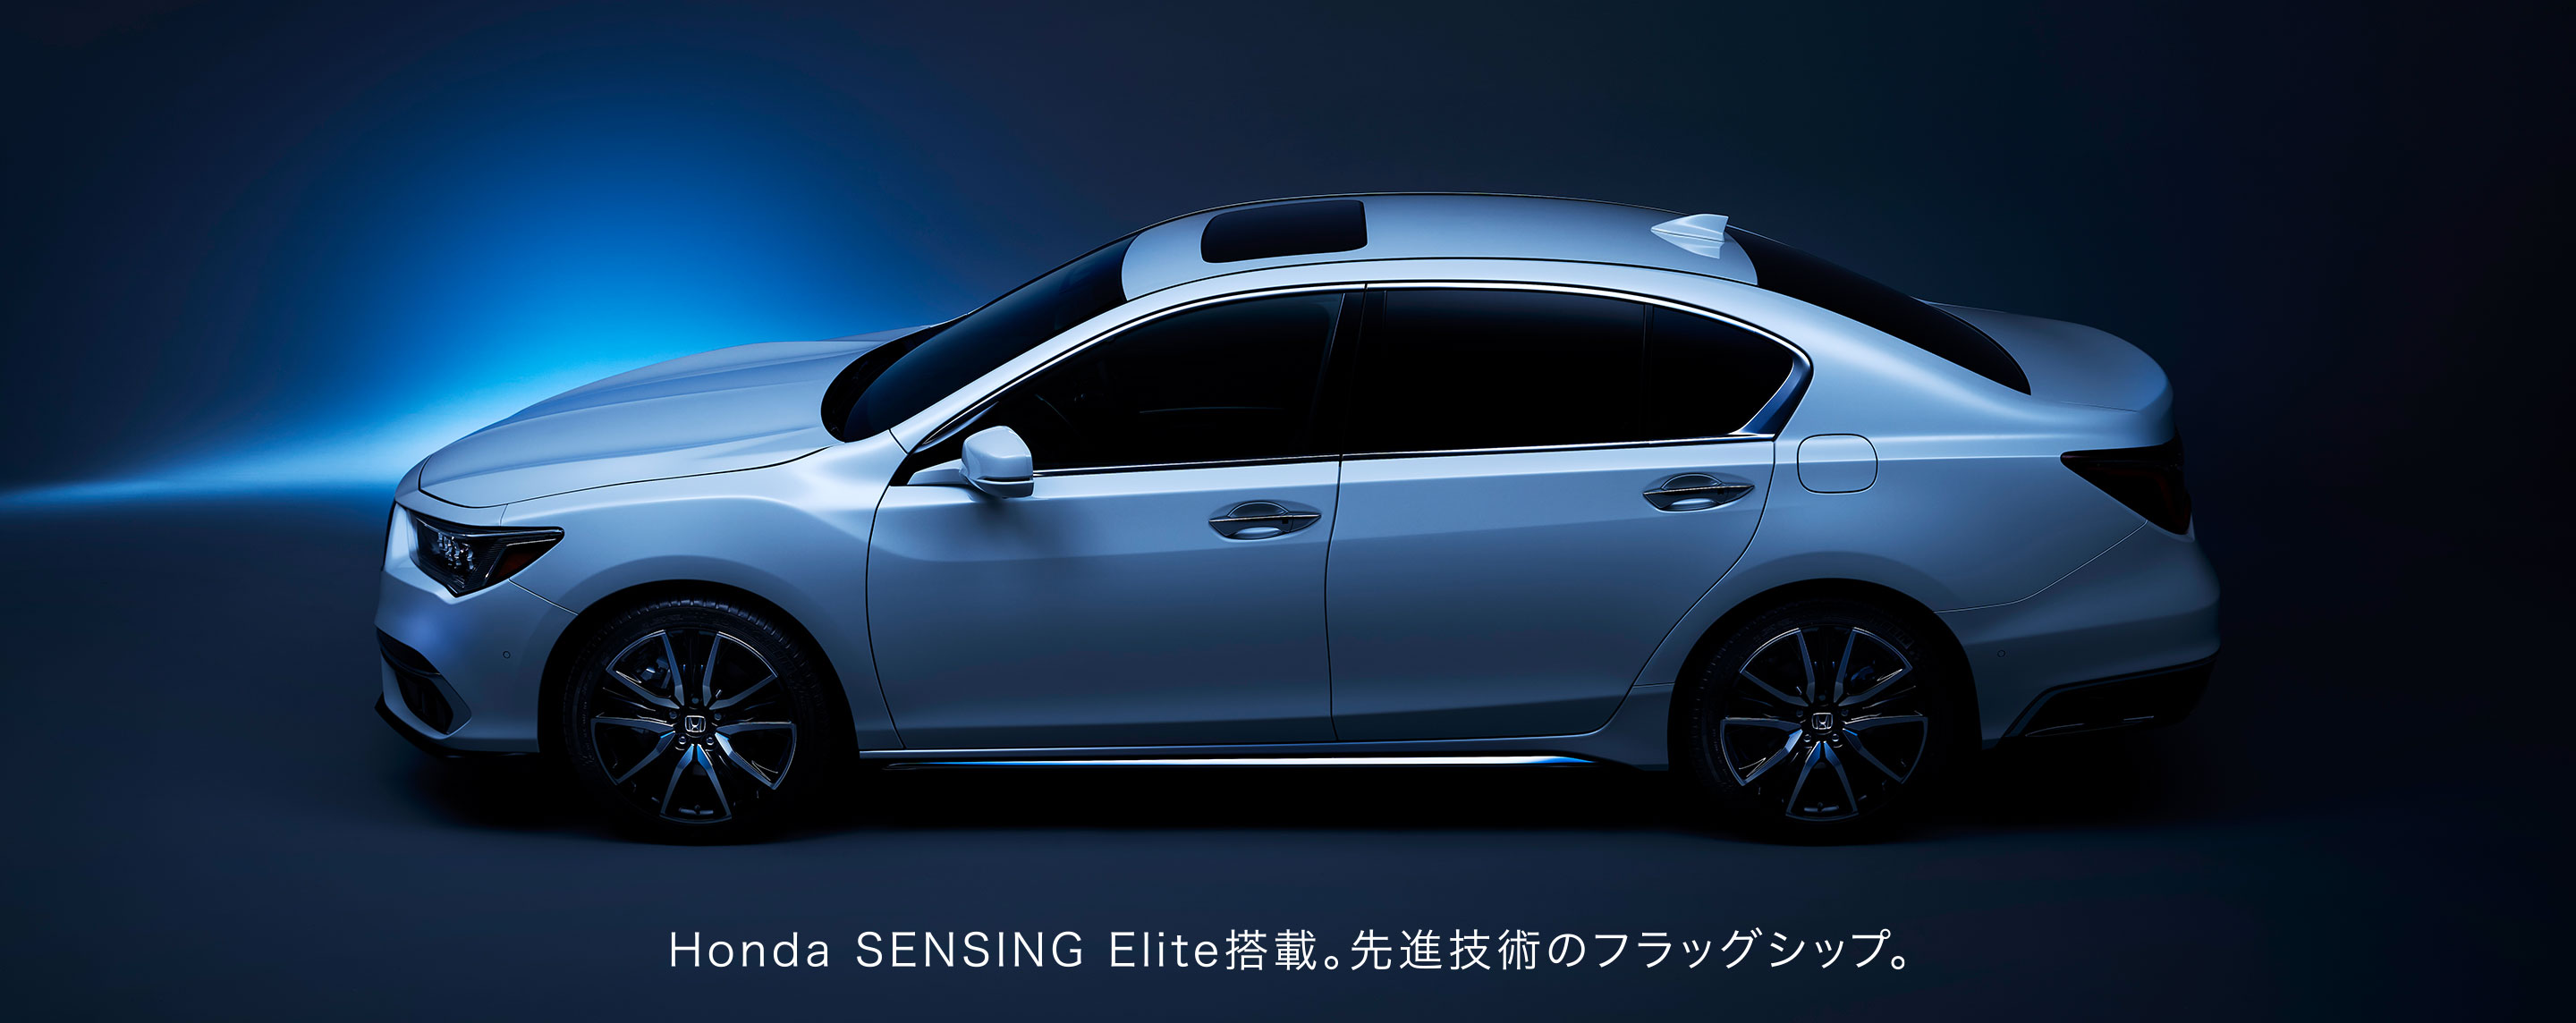 Honda SENSING Elite搭載。先進技術のフラッグシップ。